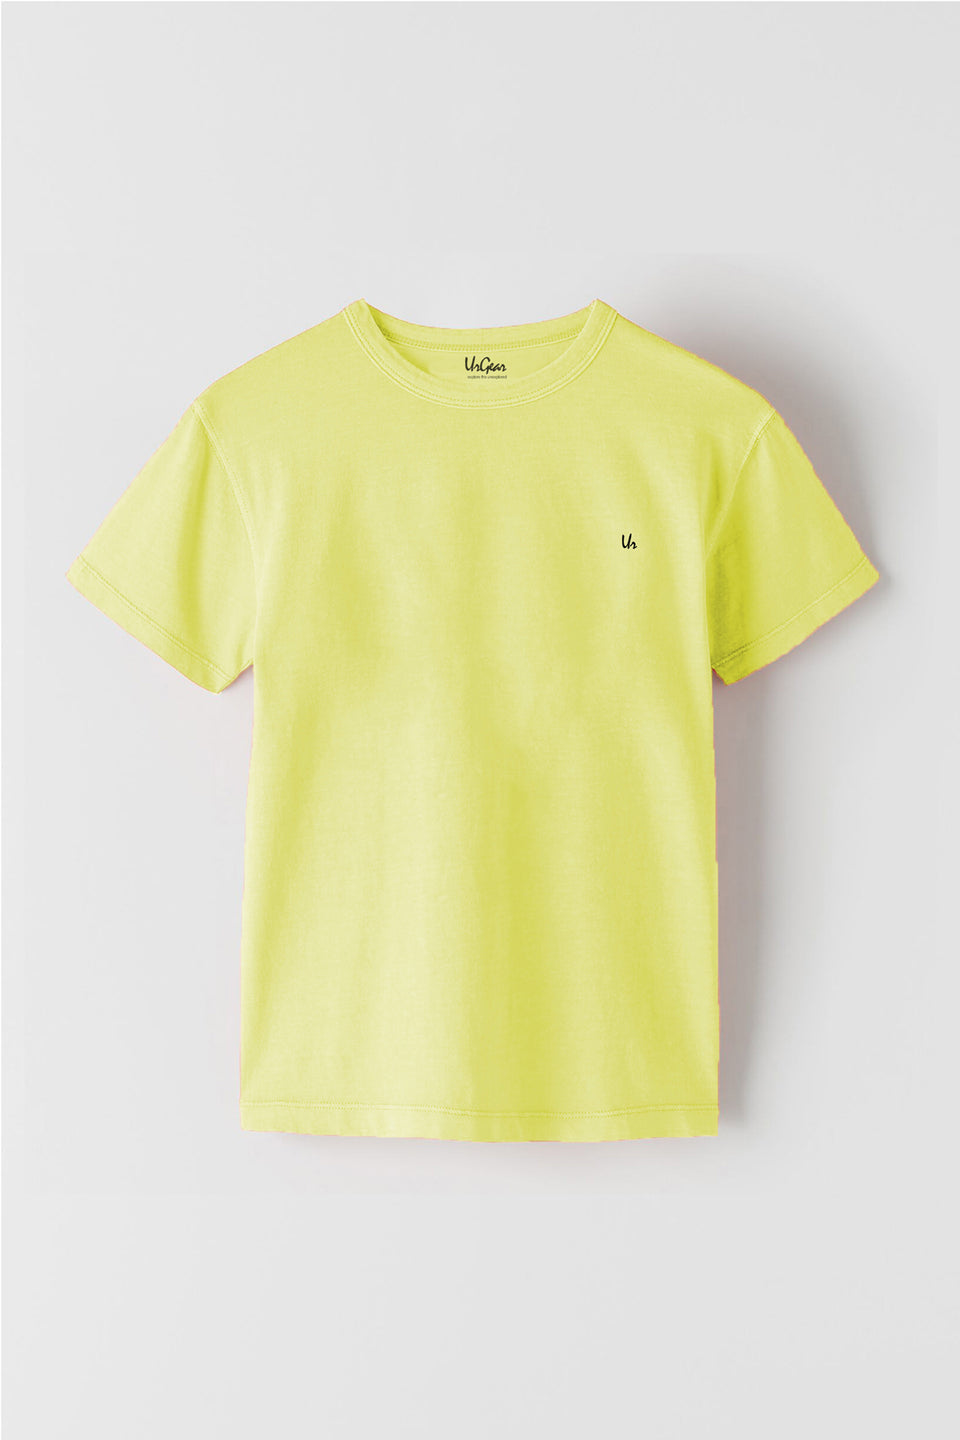 girls solid light yellow round neck t-shirt